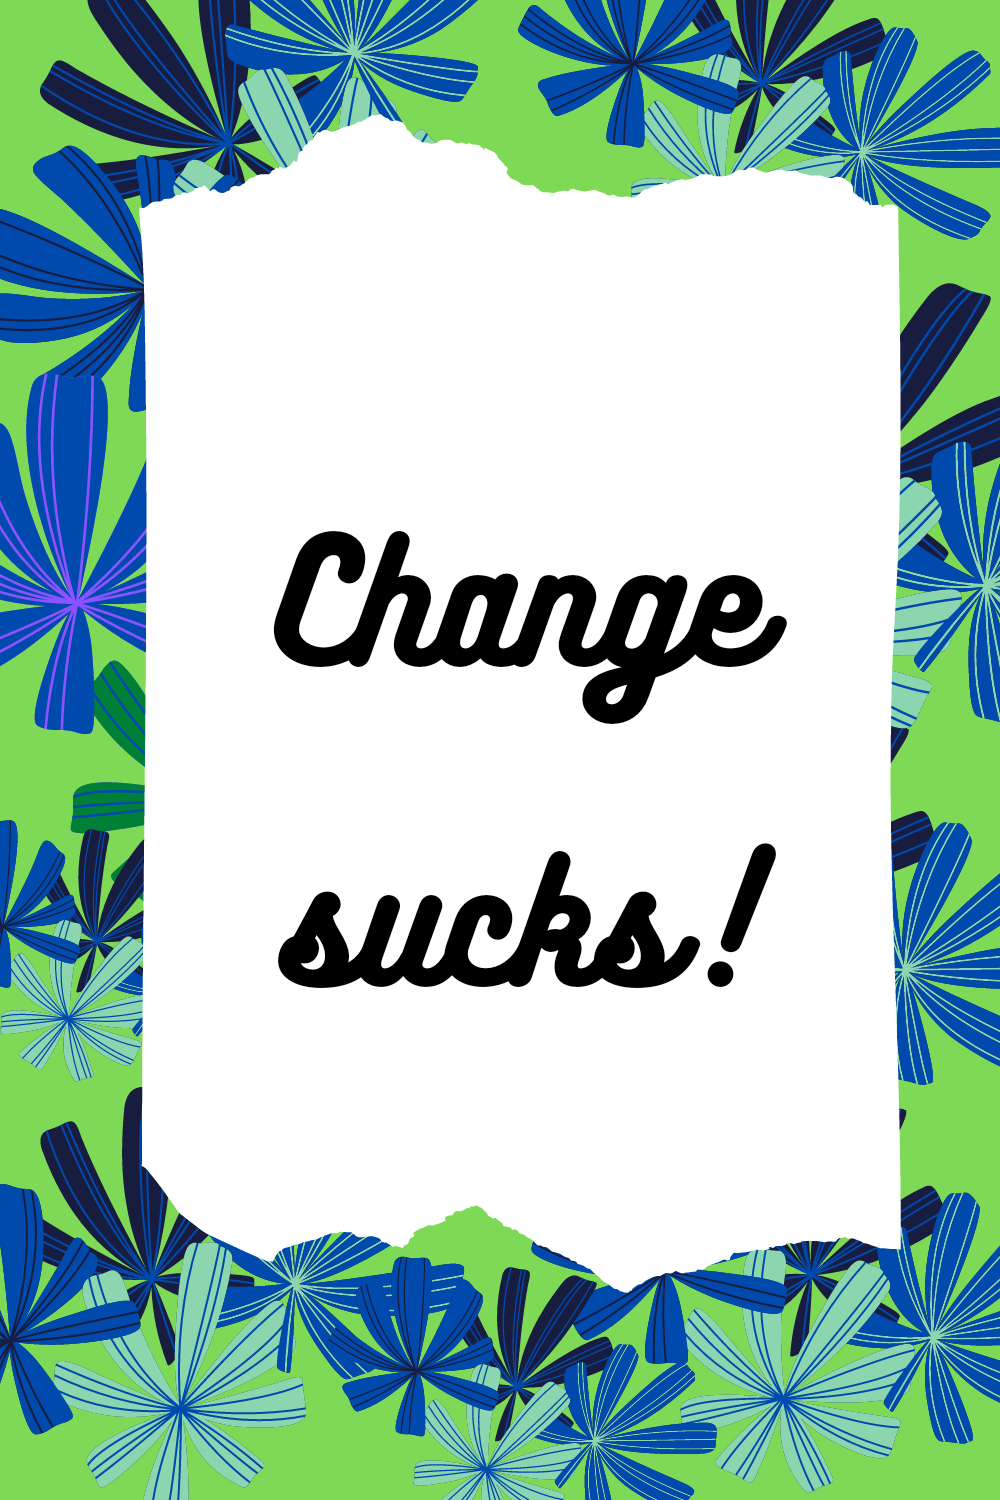 Change sucks!